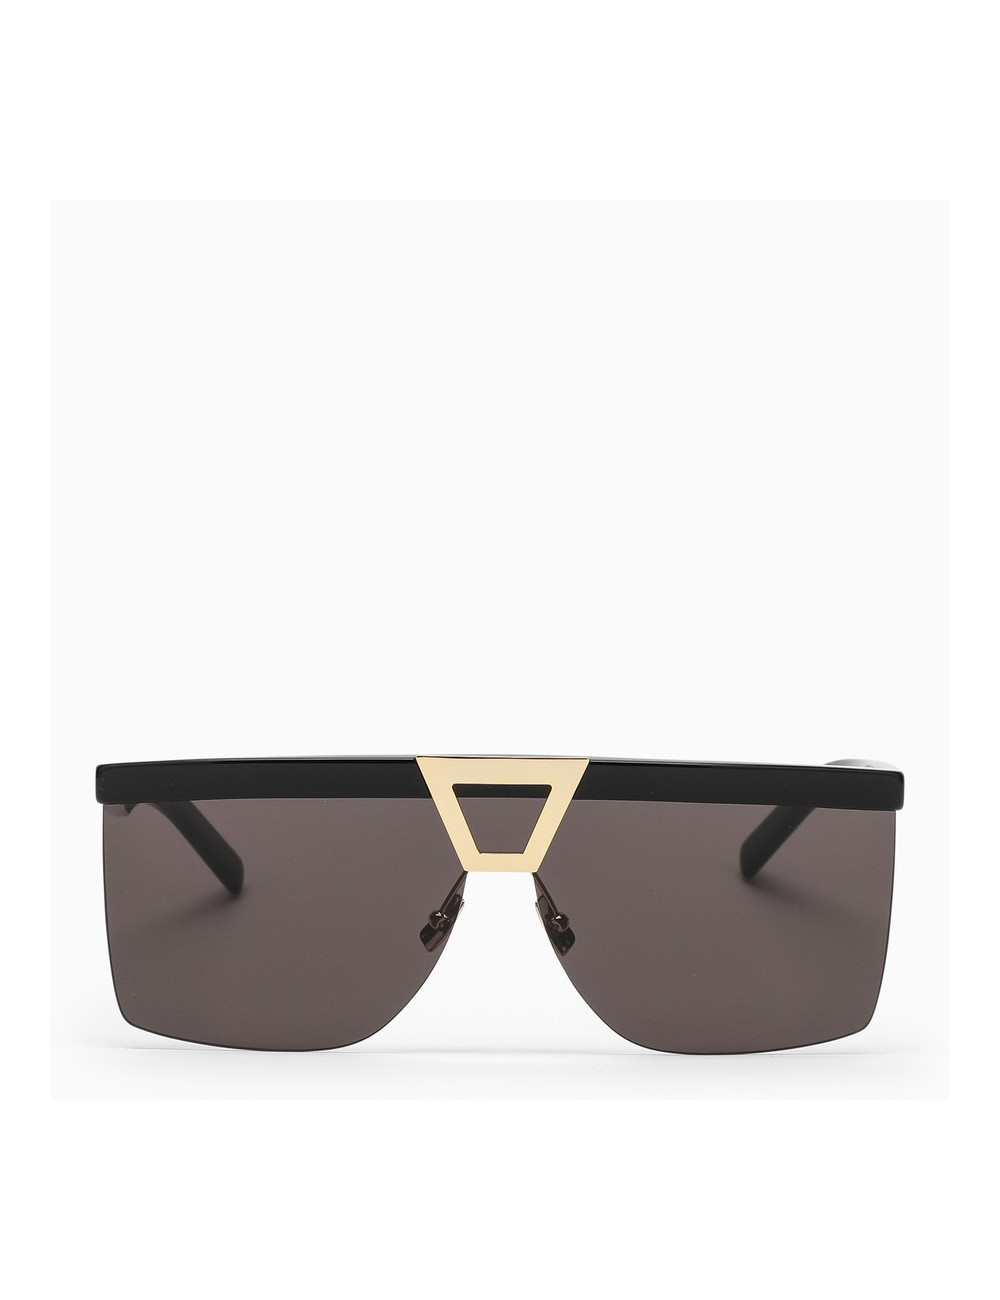 Saint Laurent SL 537 PALACE 001 sunglasses for women – Ottica Mauro